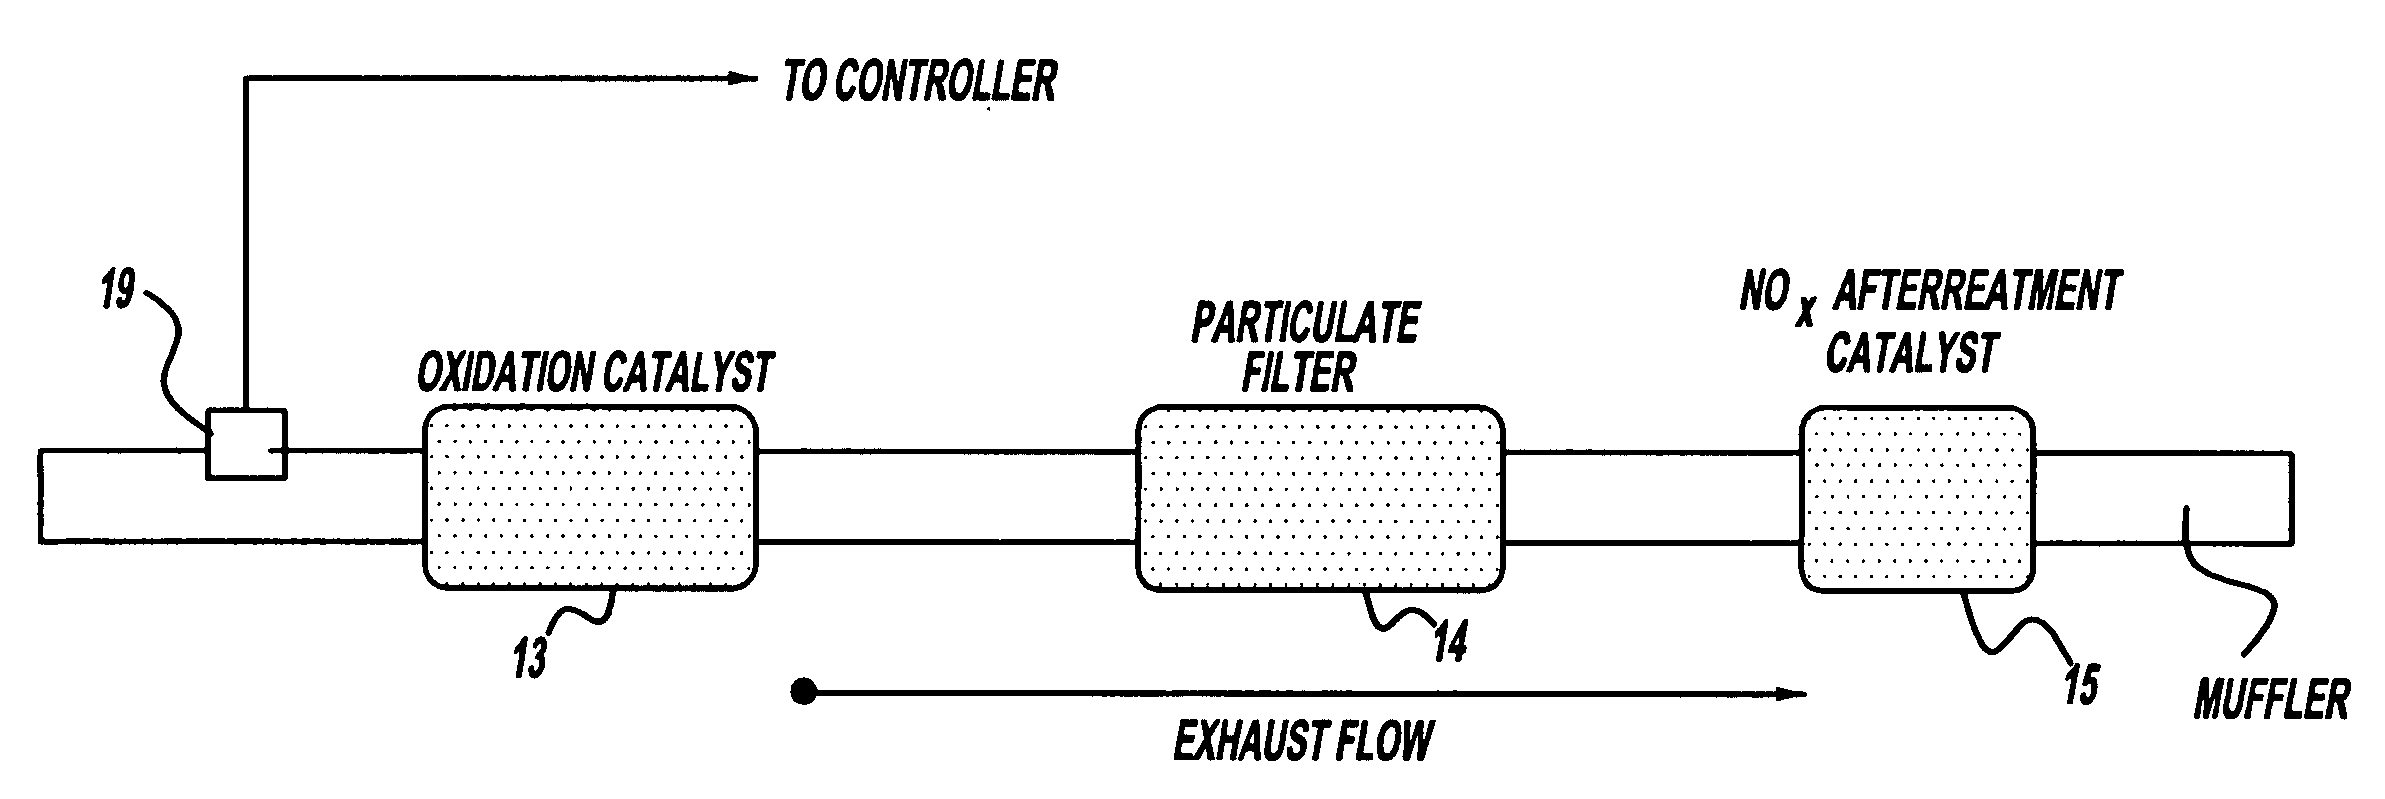 Diesel particulate filter pressure monitor